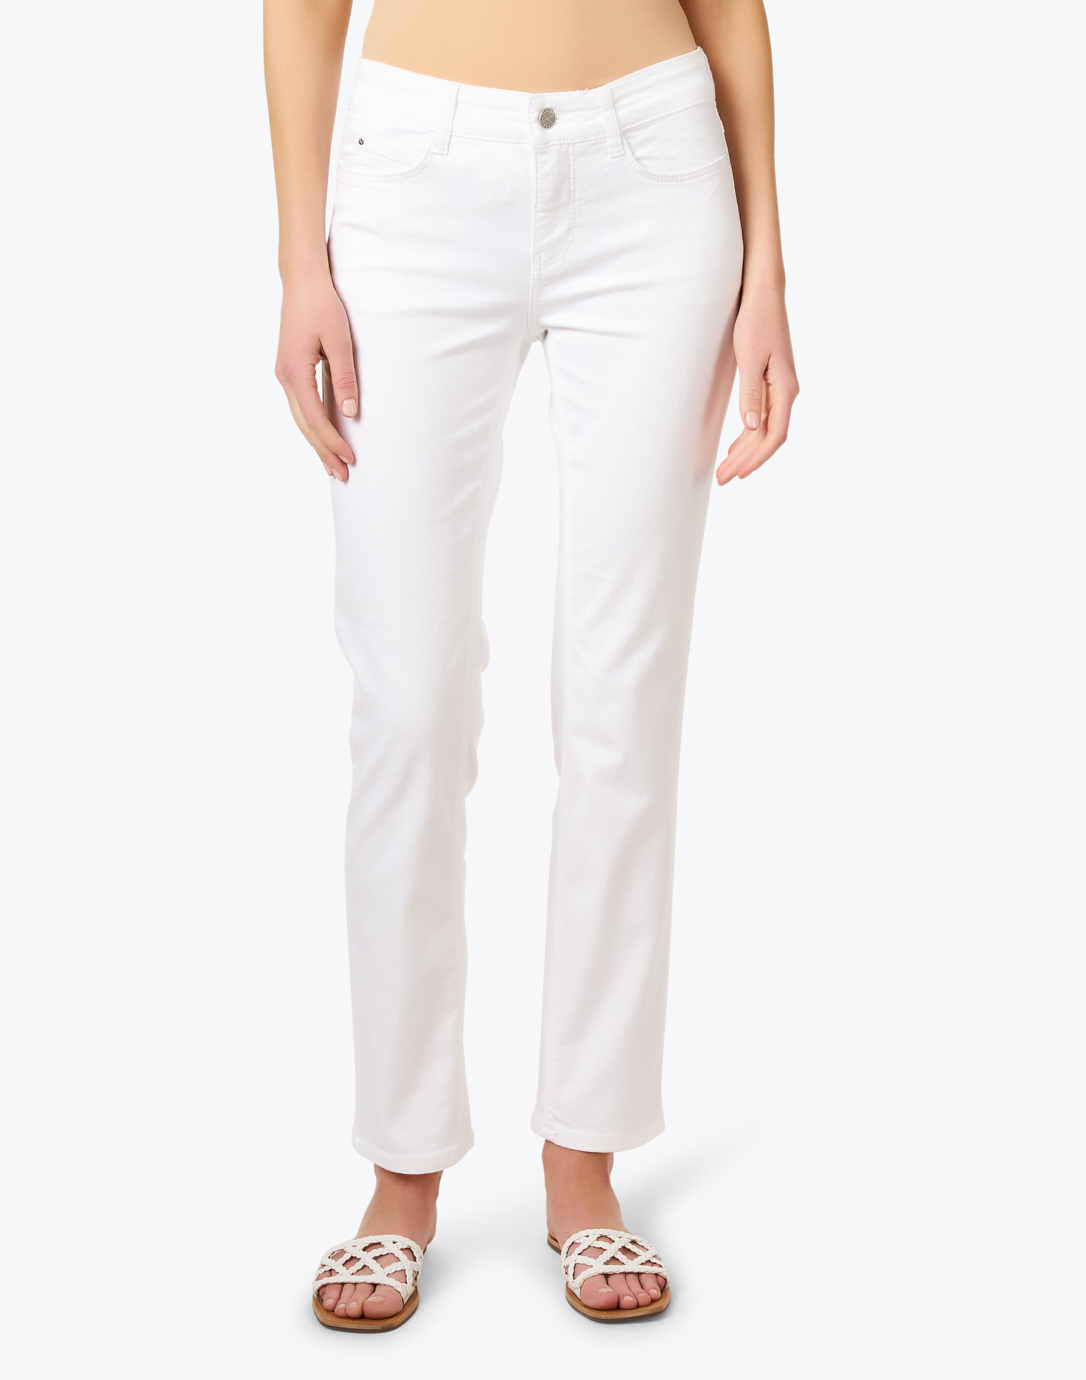 Jeans Leg | Dream Straight MAC White Jean